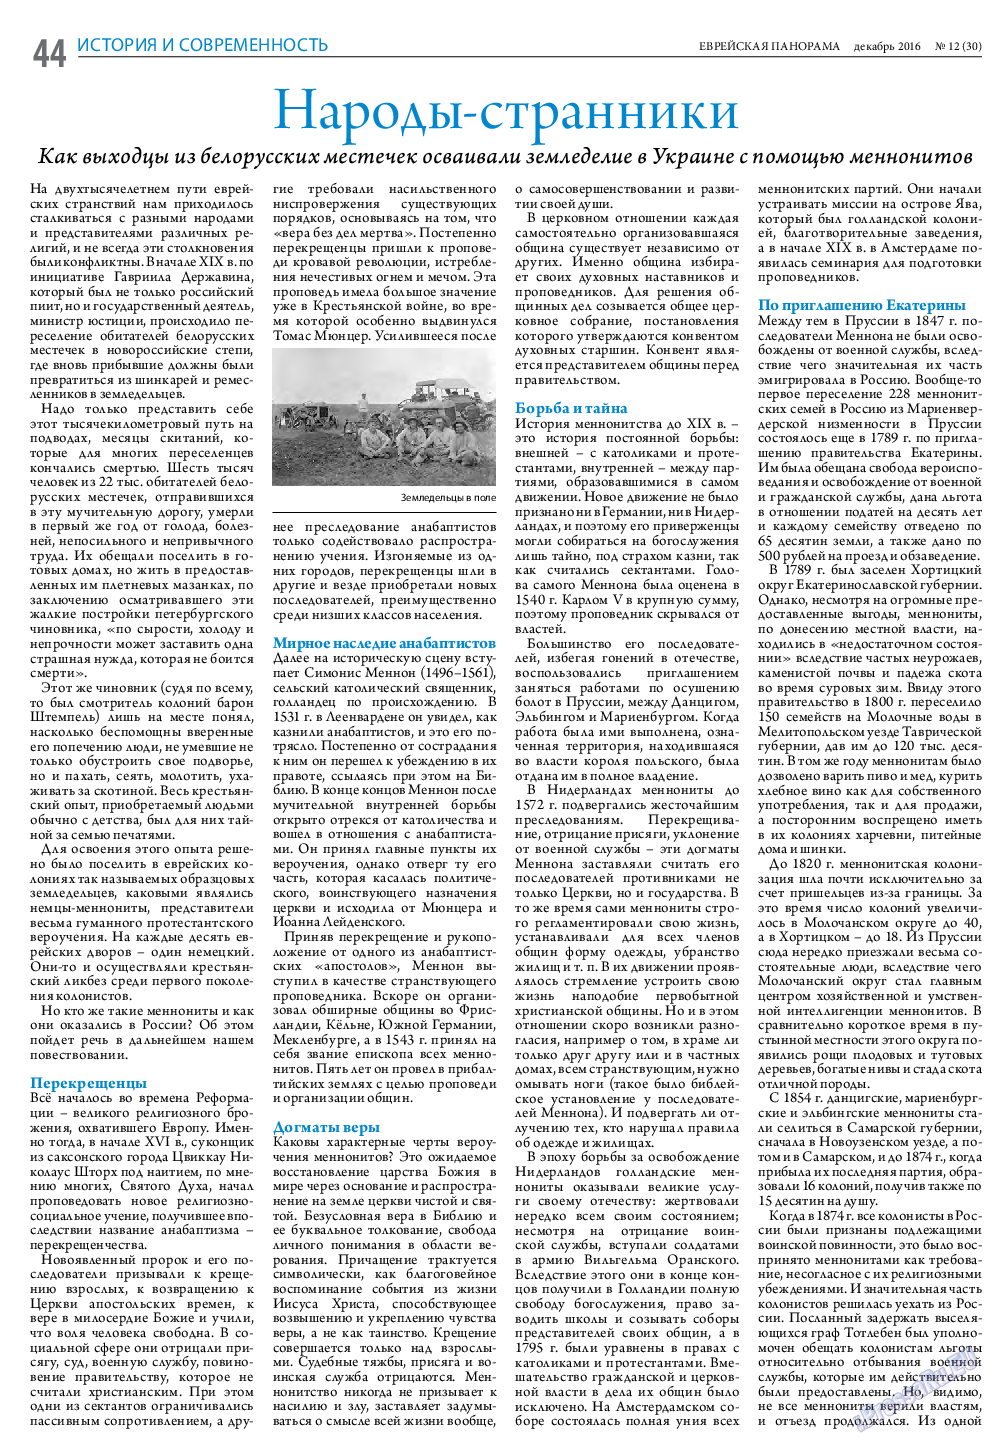 Еврейская панорама, газета. 2016 №12 стр.44